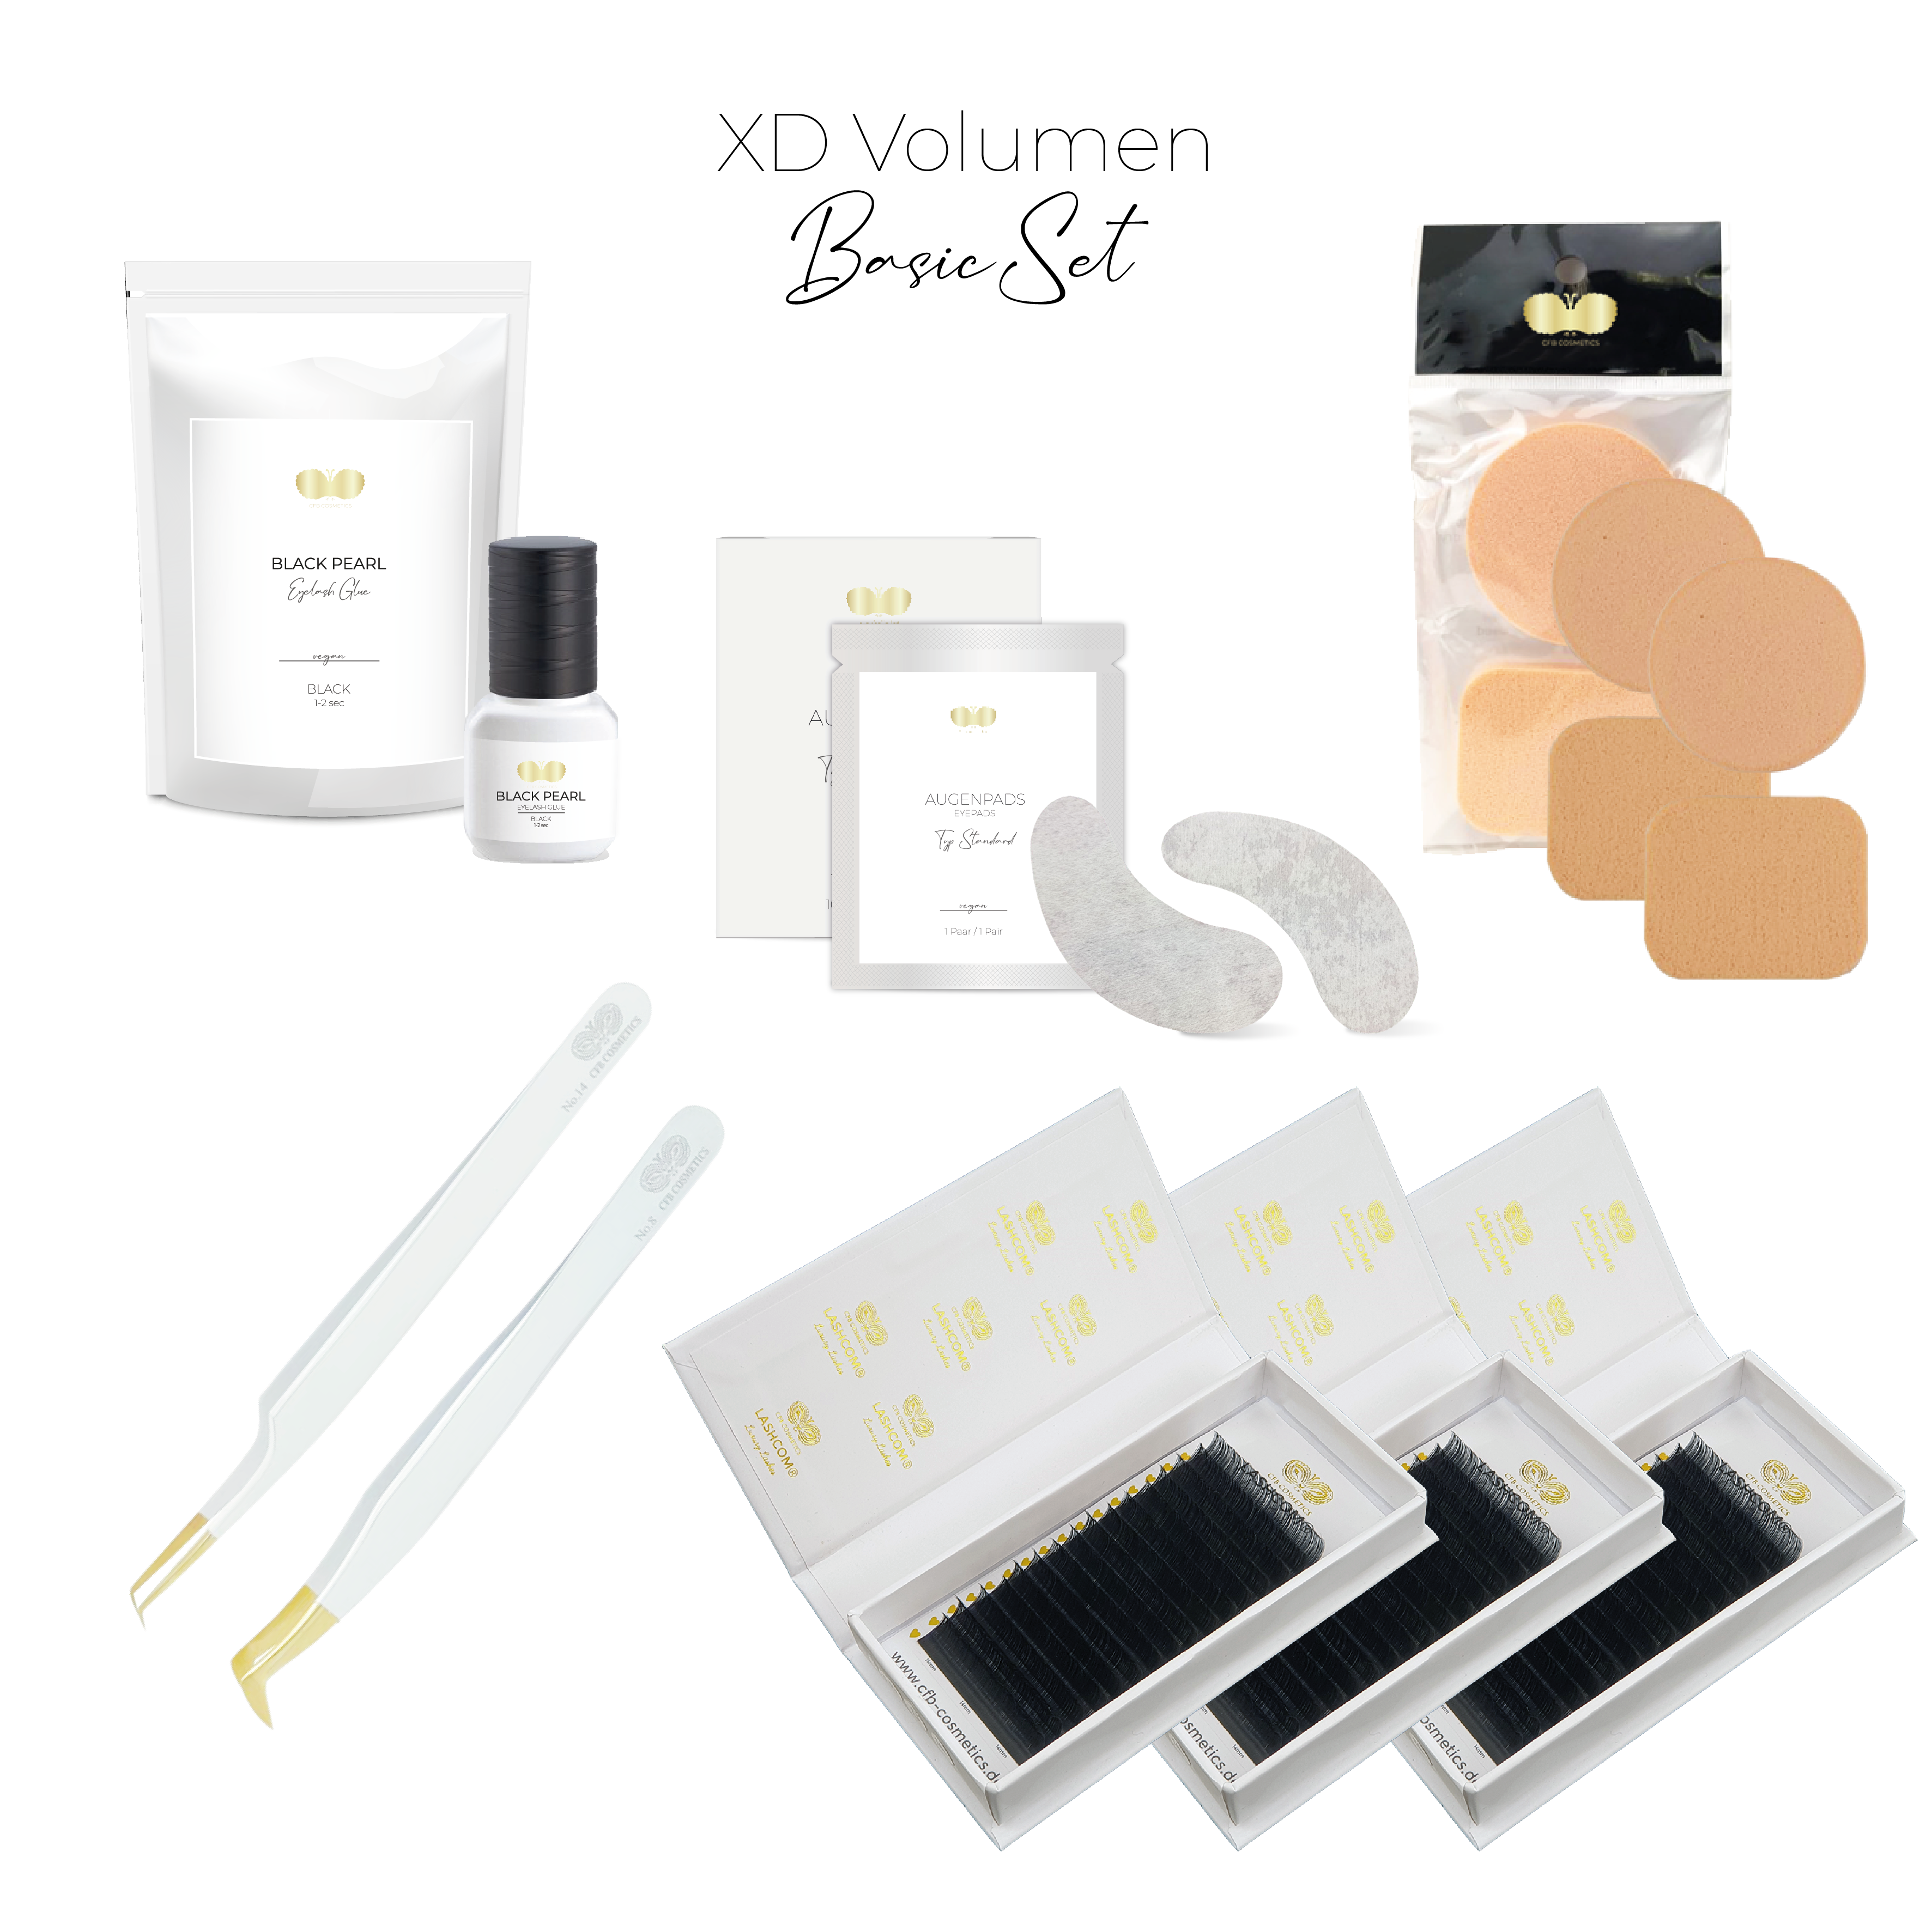 XD Volume eyelash extensions | Basic Set